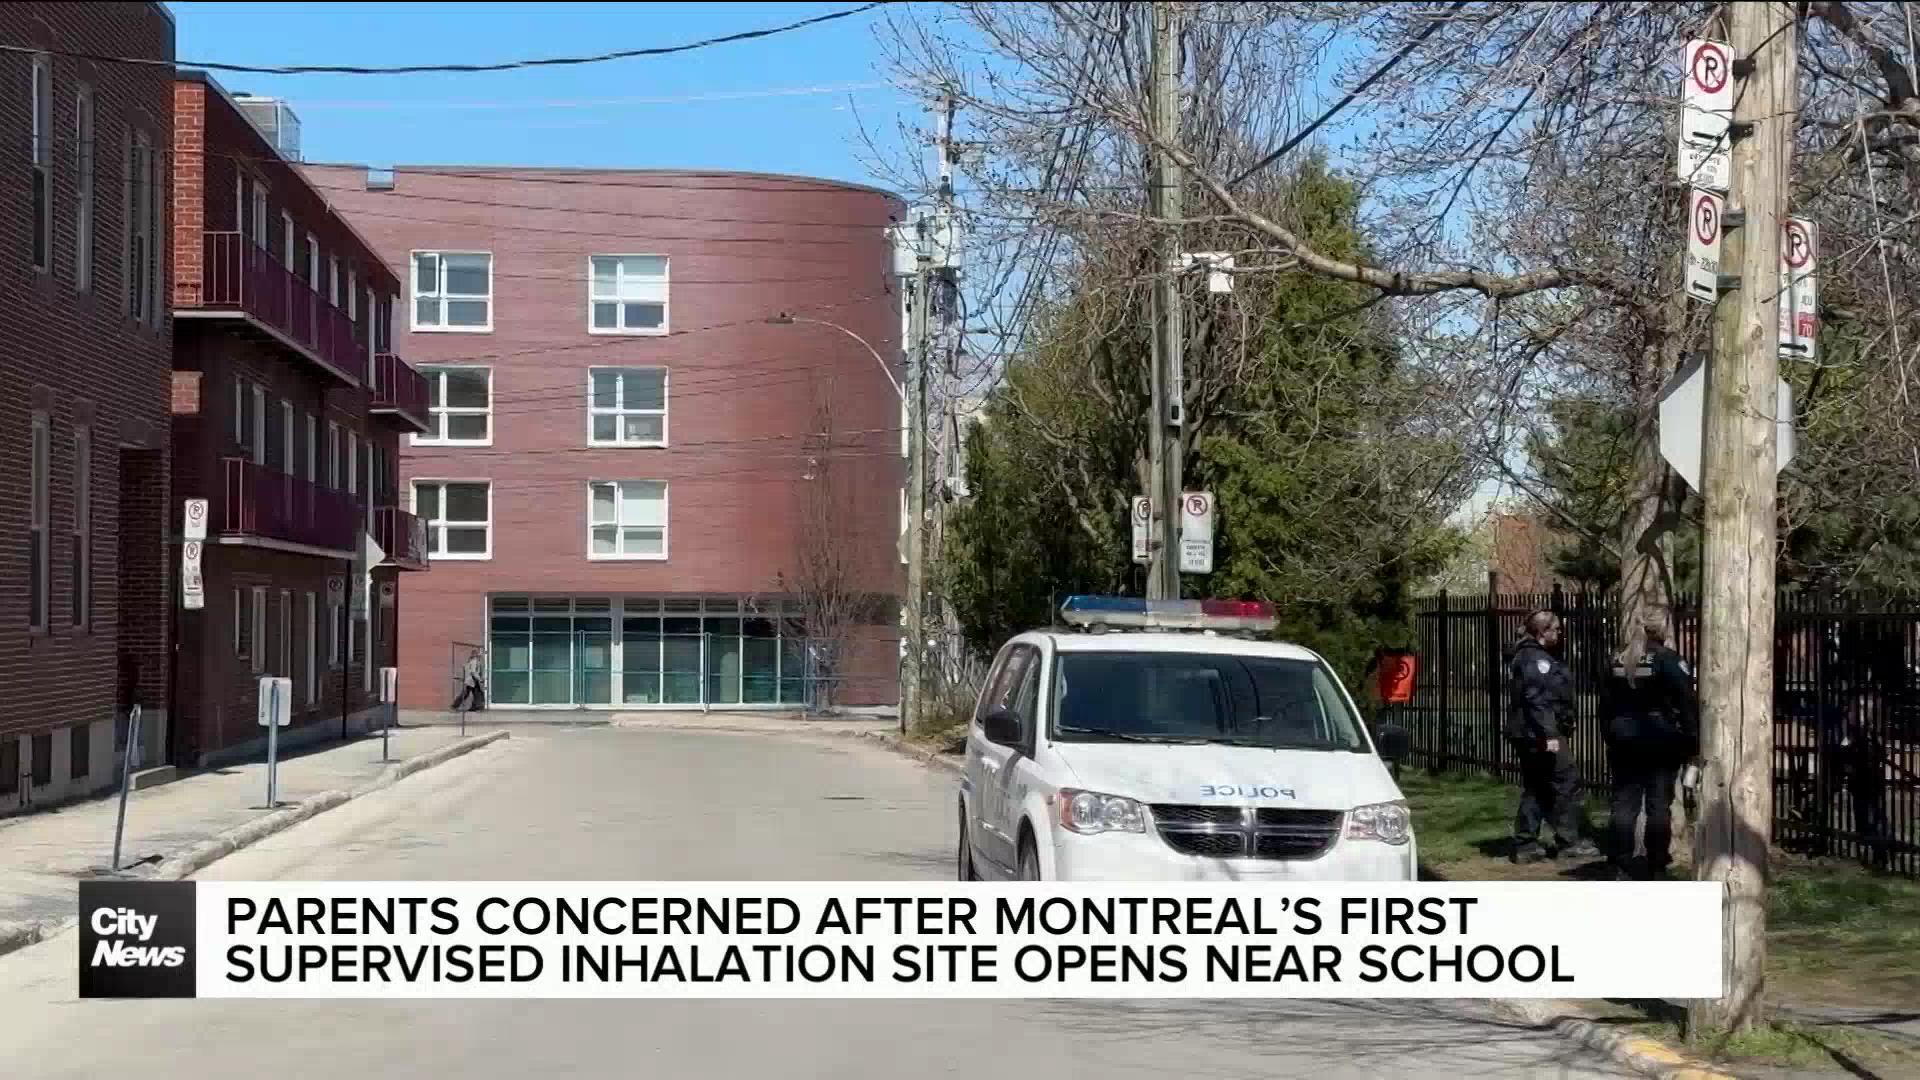 Concerns after Montreal's first supervised inhalation site opens